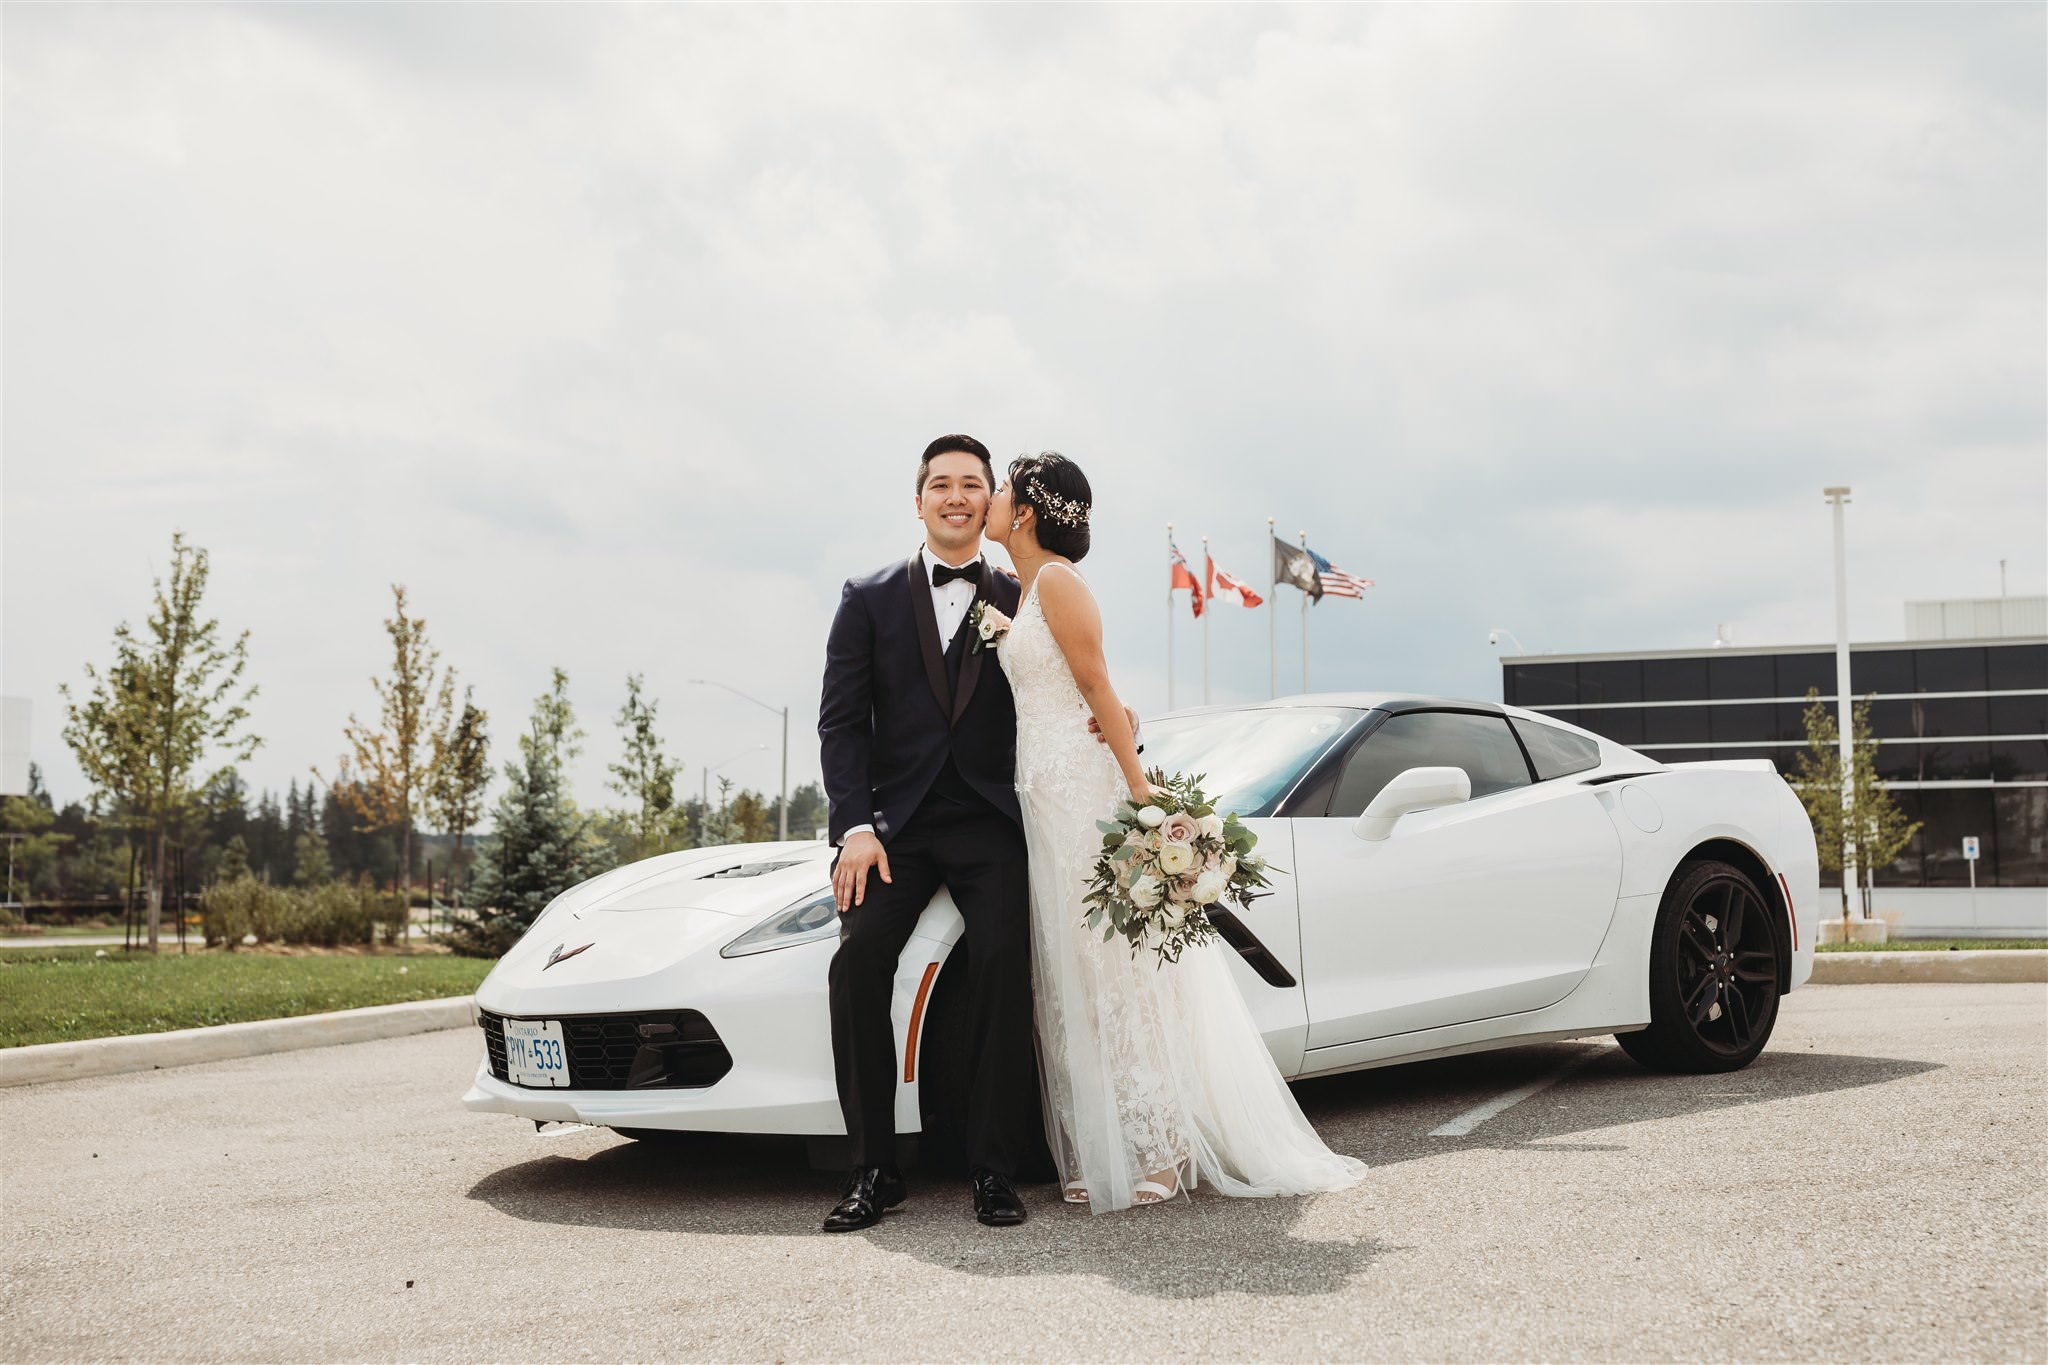 Rainy Day Backyard Wedding, Toronto wedding photographer, Ten2ten Photography, Richmond Green Wedding